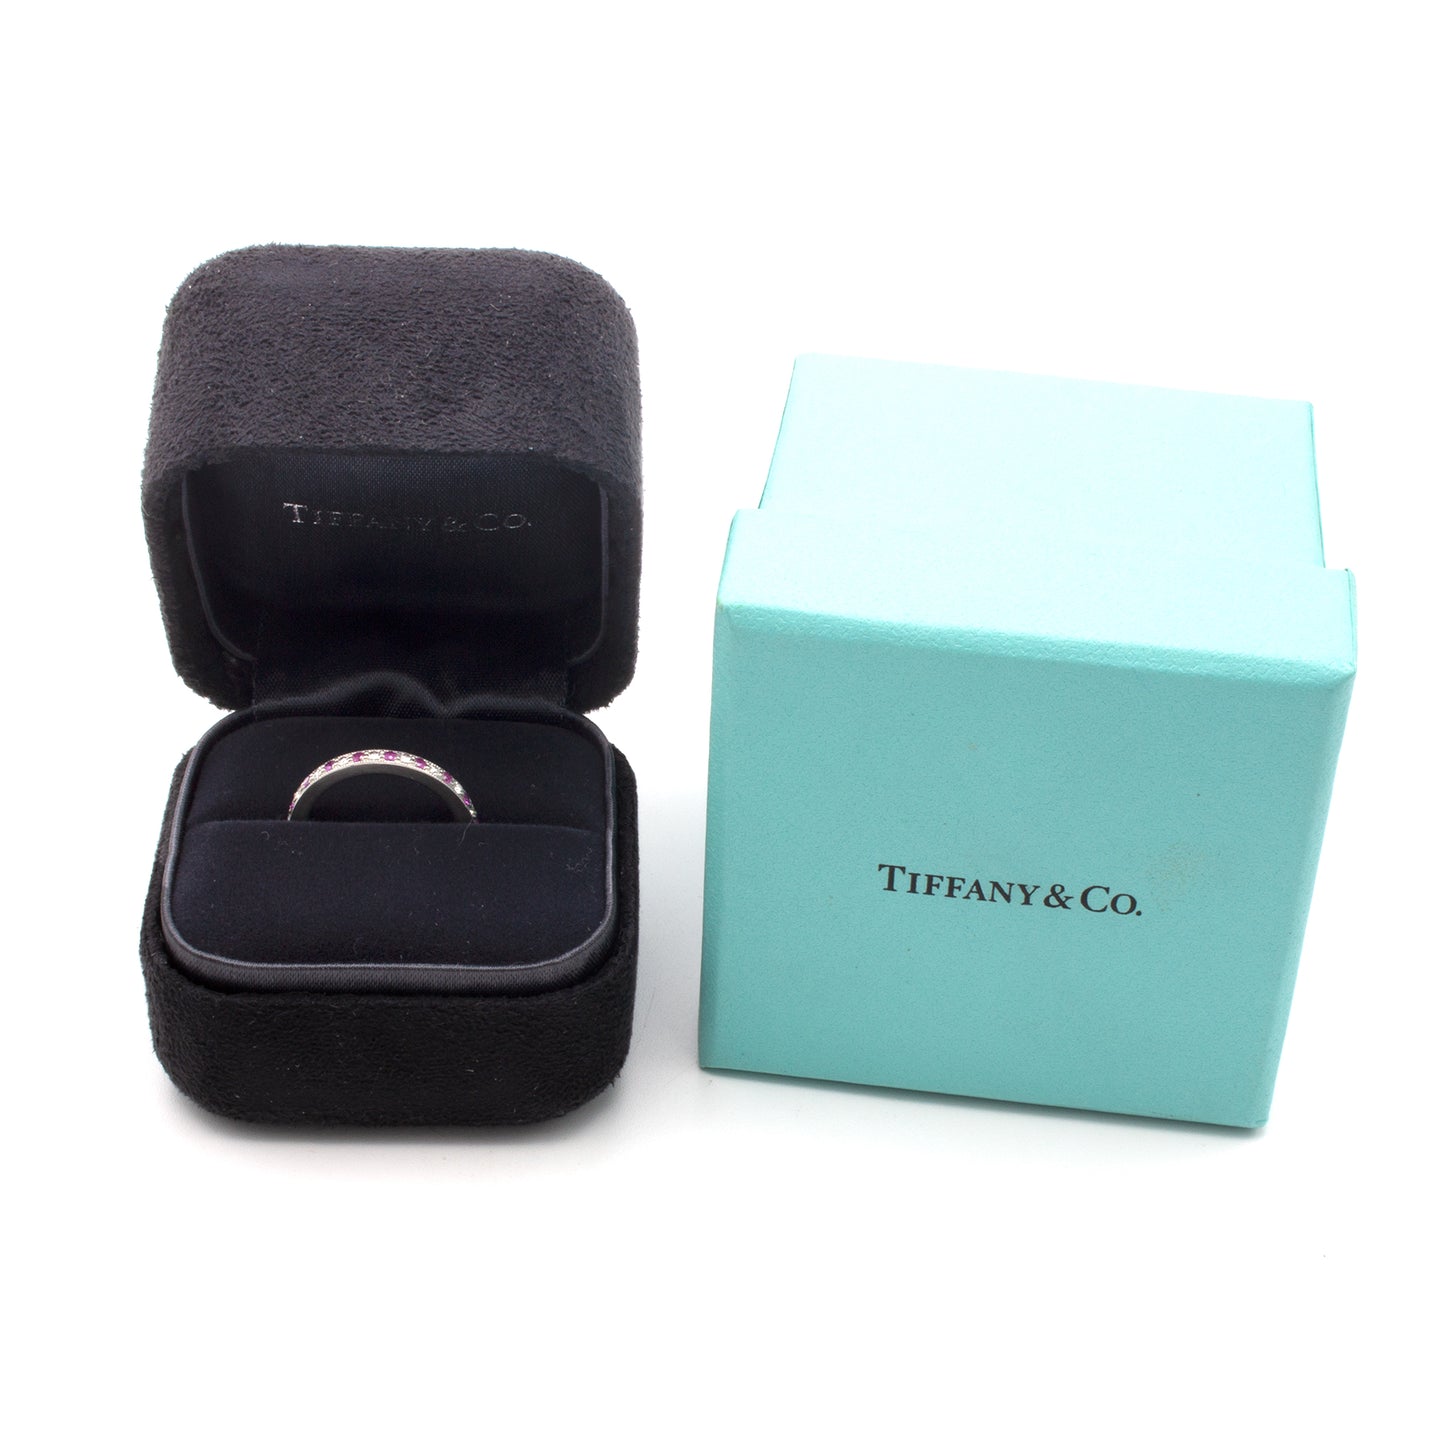 Tiffany & Co Legacy ring